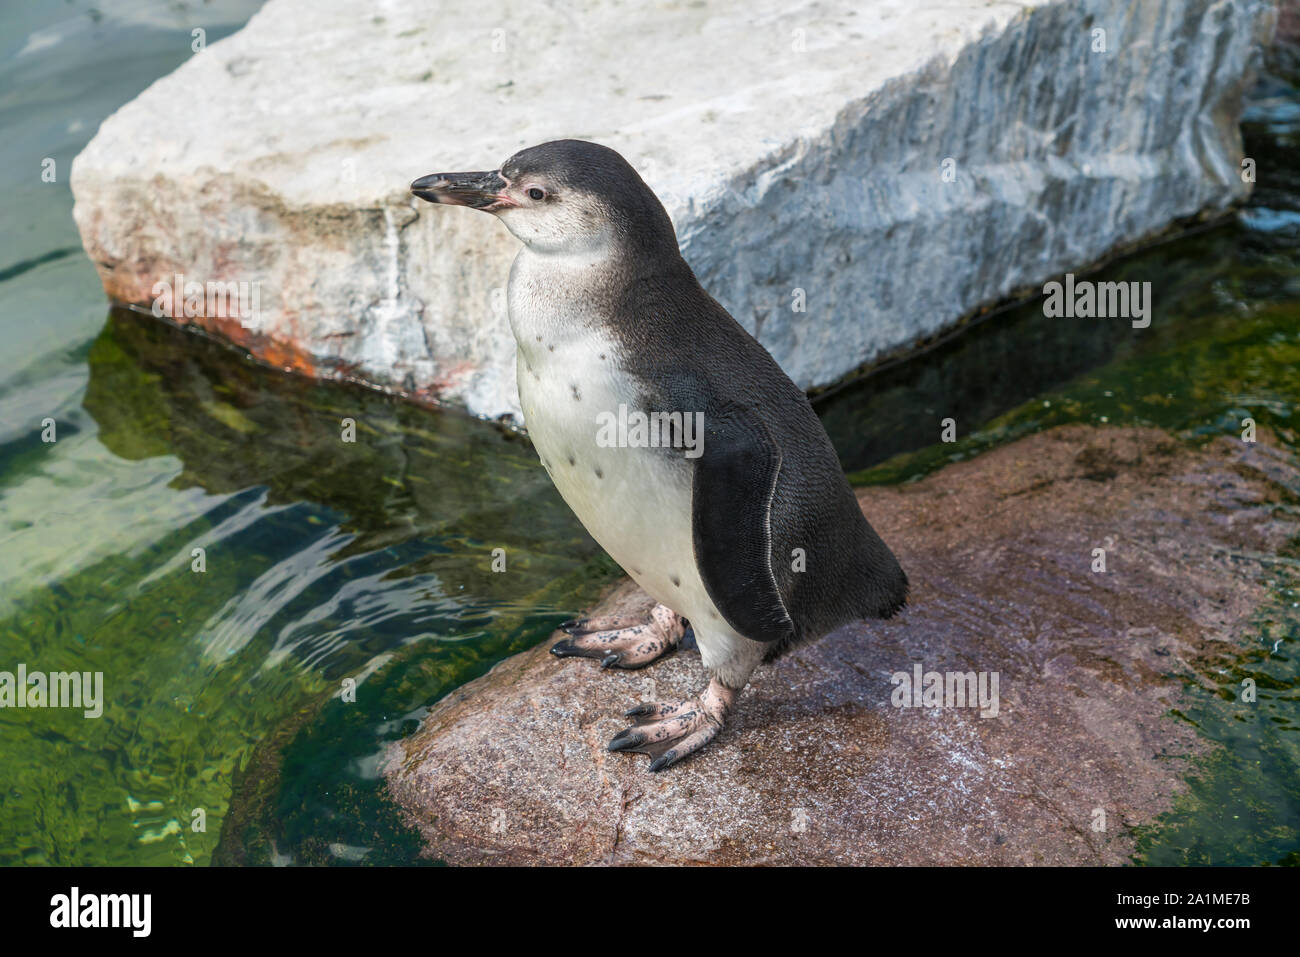 A Humboldt penguin in the Copenhagen Zoo, Denmark. Stock Photo